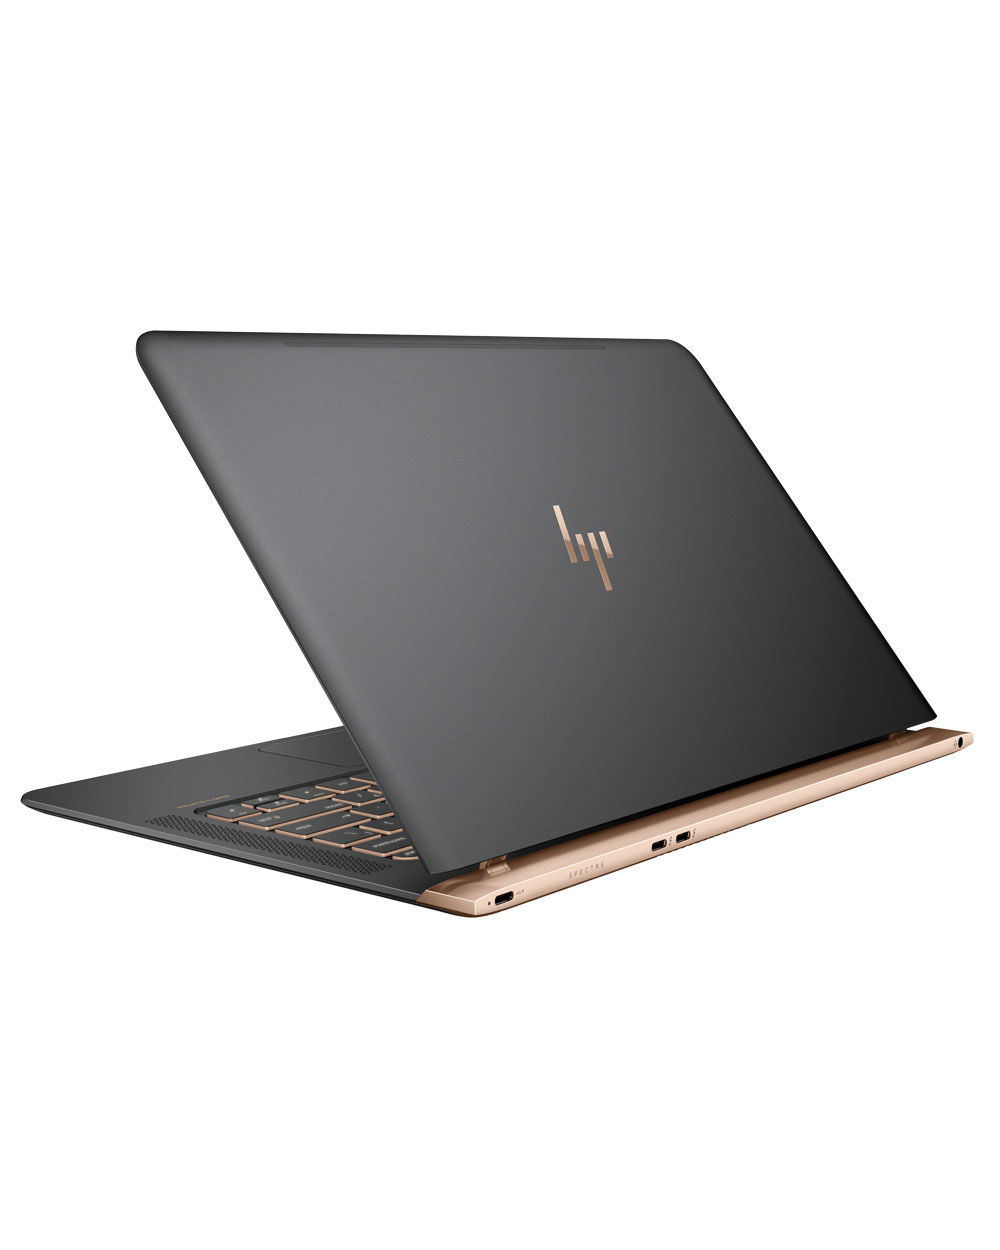 HP Spectre 13 laptop, $2499